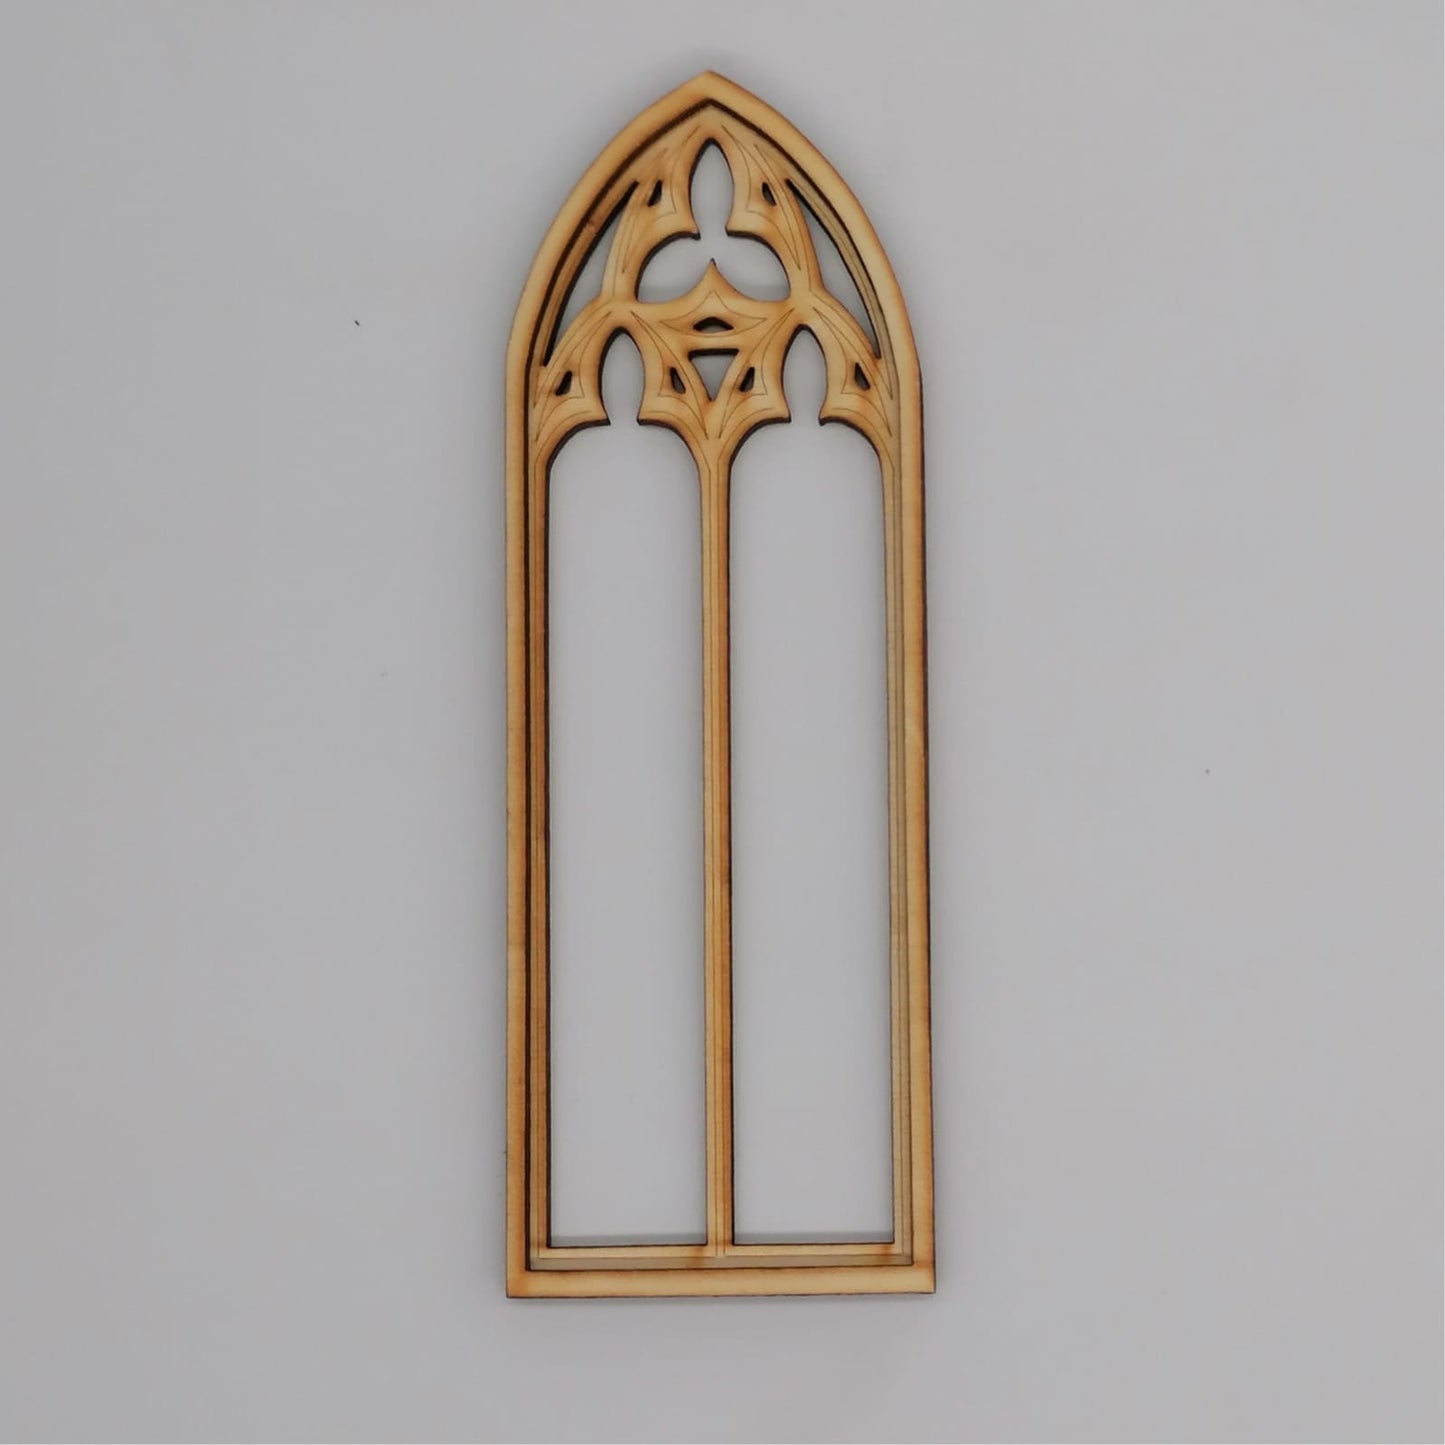 Gothik Miniatur Fenster - Design C - Miniaturen